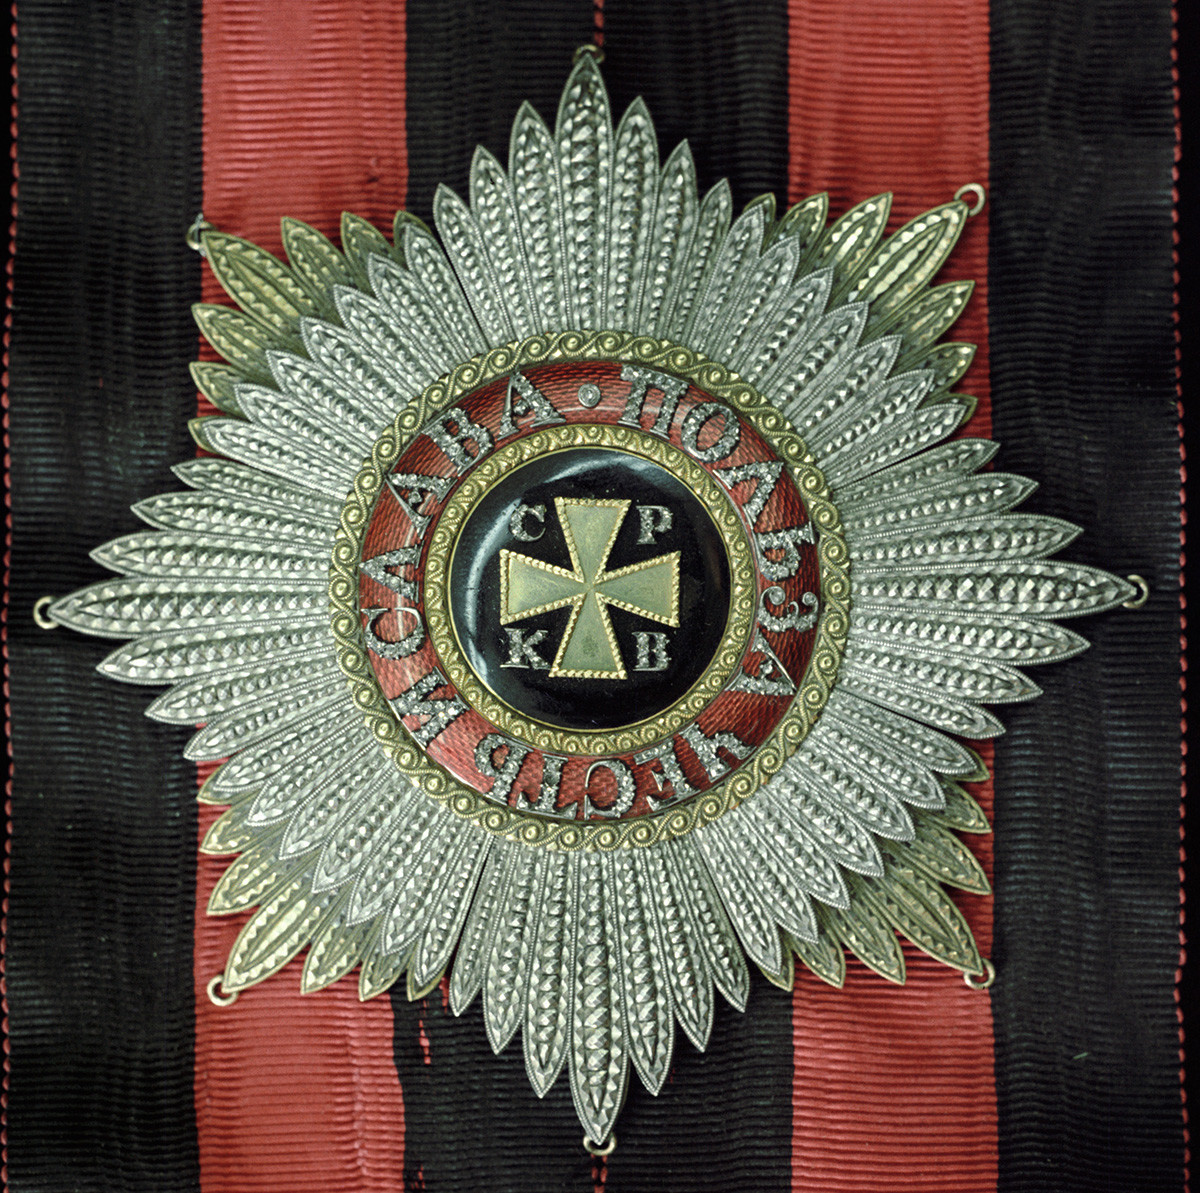 The Star of the Order of Saint Vladimir, 1st class.

